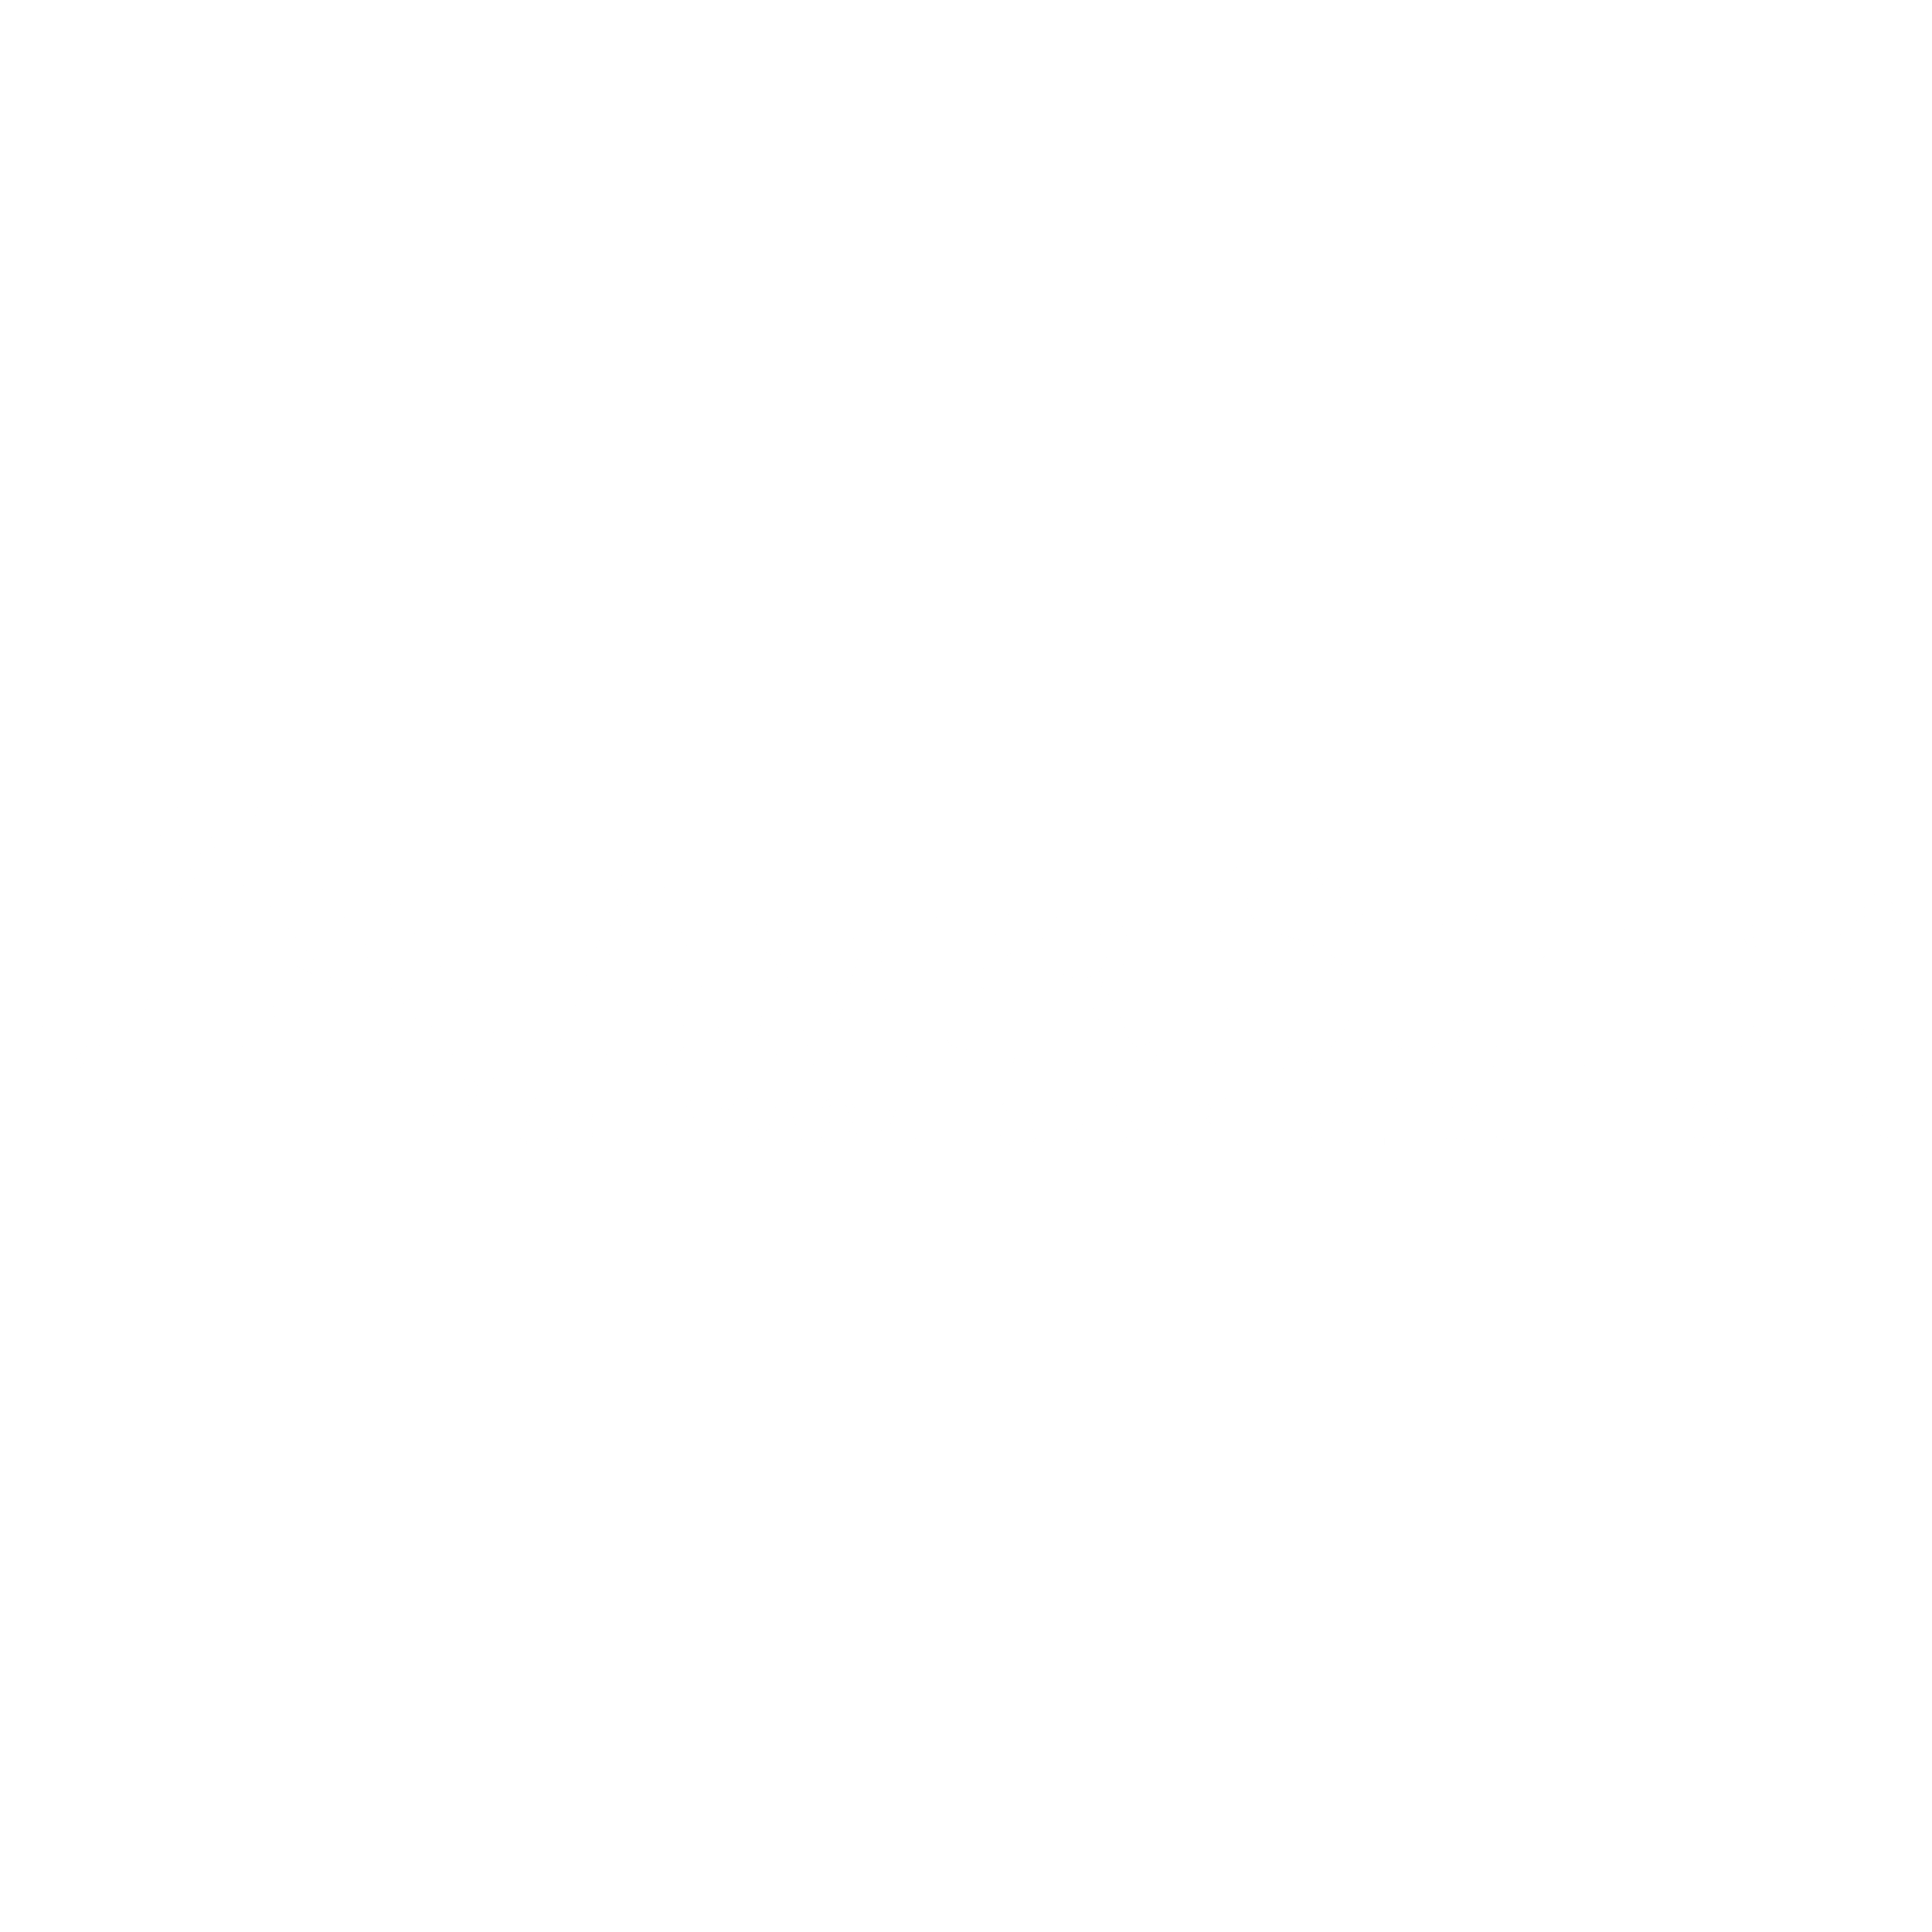 Amerisuites Logo - AmeriSuites Logo PNG Transparent & SVG Vector - Freebie Supply